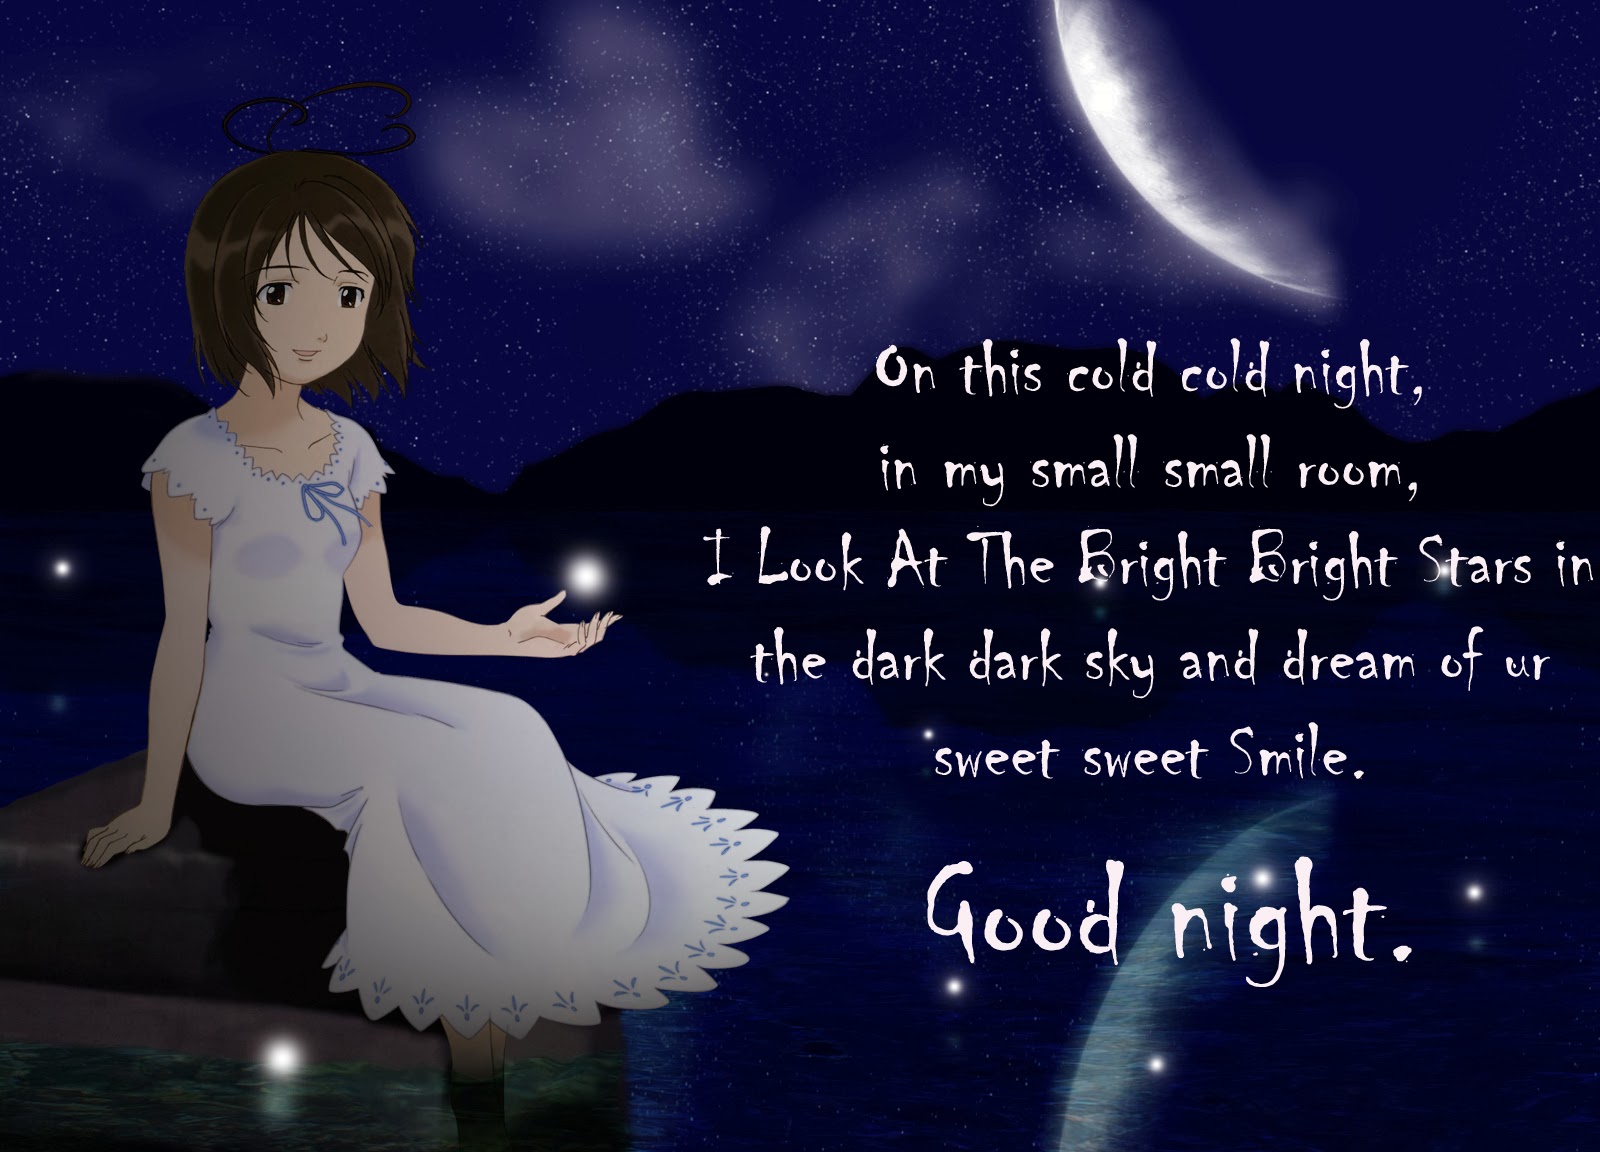 Good Night HD Wallpaper And Image Girl Wishing